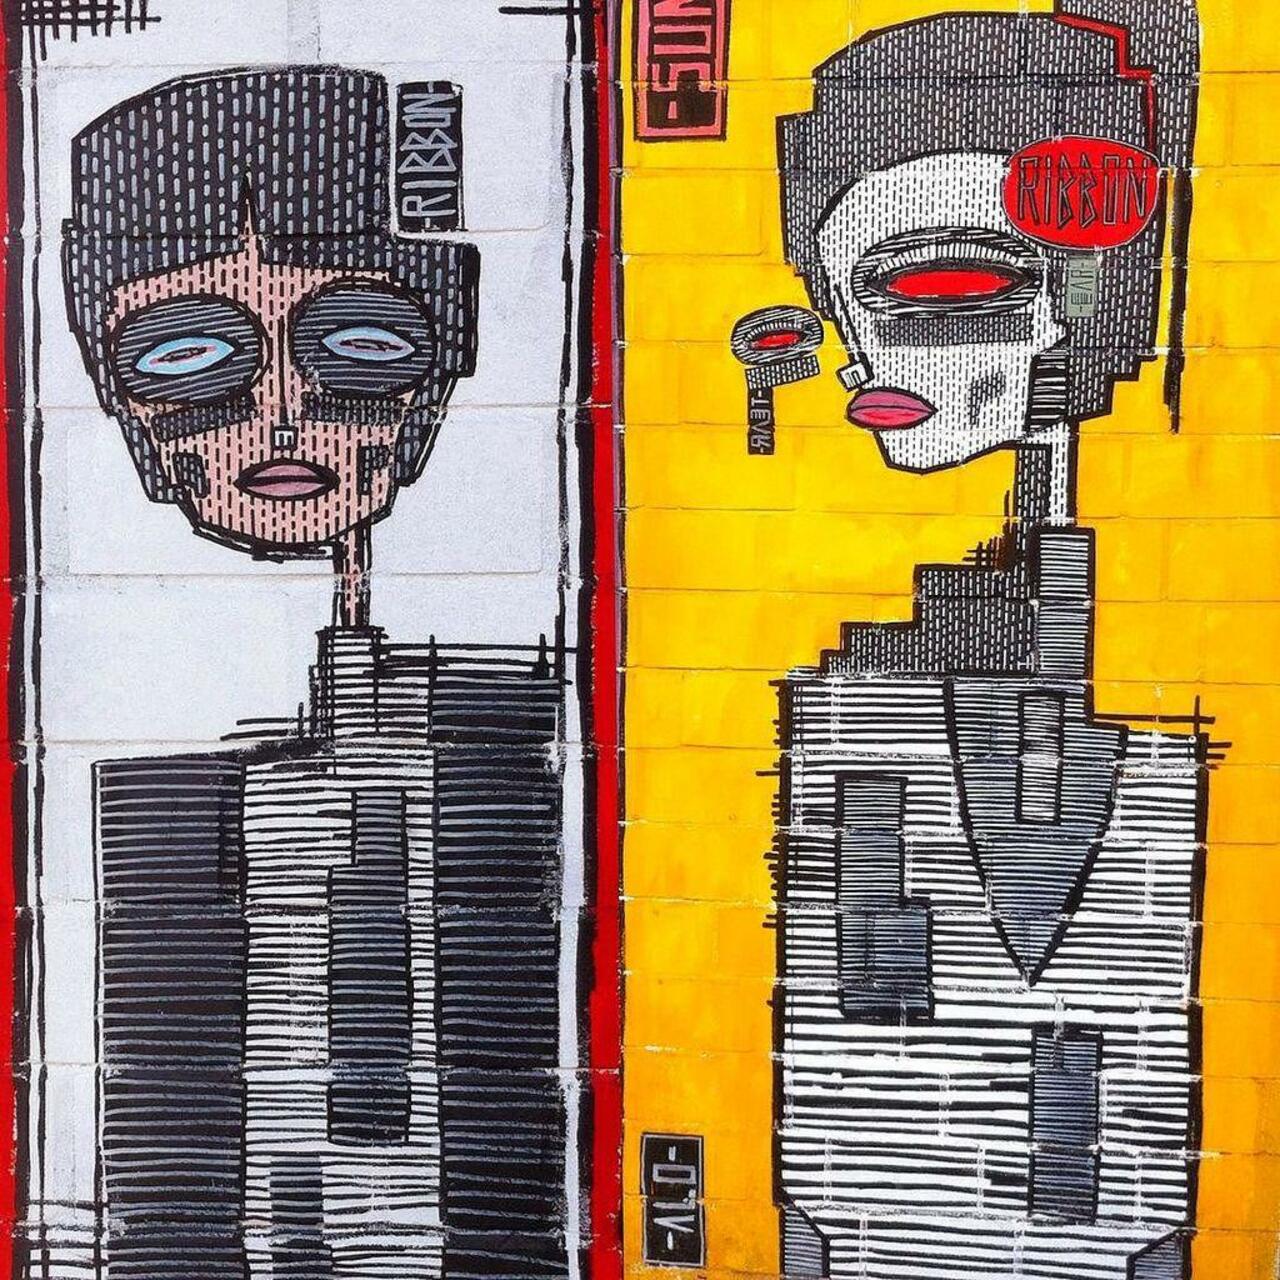 #Alo_art #collage #streetart #urbanart #graffiti @alo_art #streetartberlin #wallart #welovestreetart #stencil #spra… http://t.co/KLFm15GPec